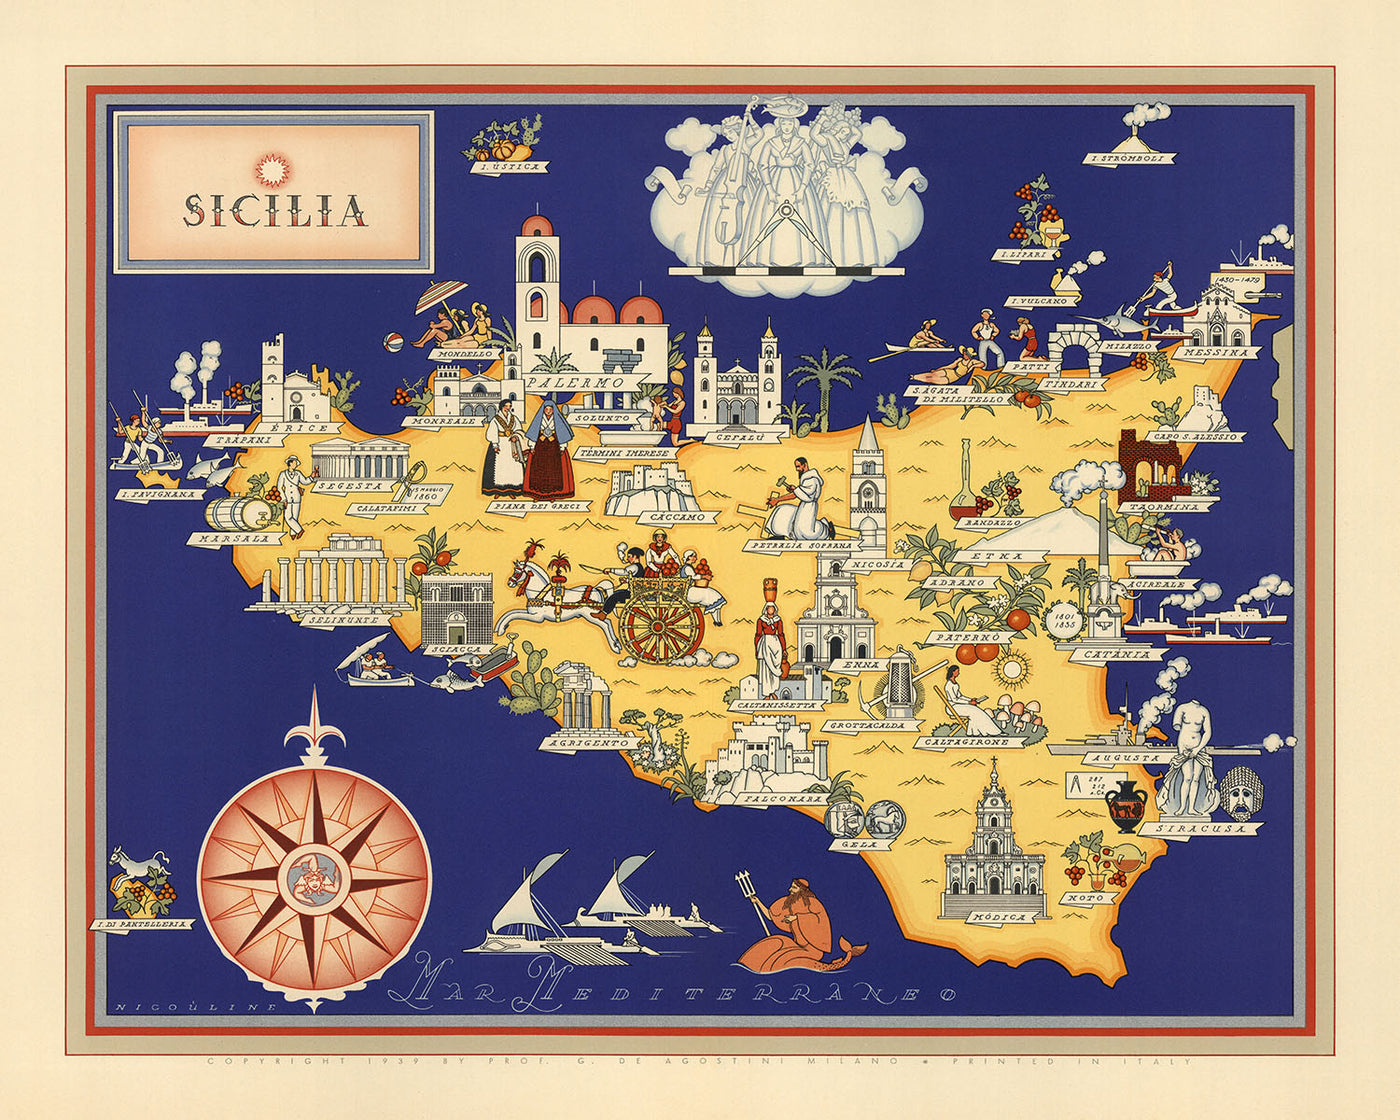 Old Pictorial Map of Sicily by De Agostini, 1938: Palermo, Catania, Messina, Parco dell'Etna, Parco dei Nebrodi